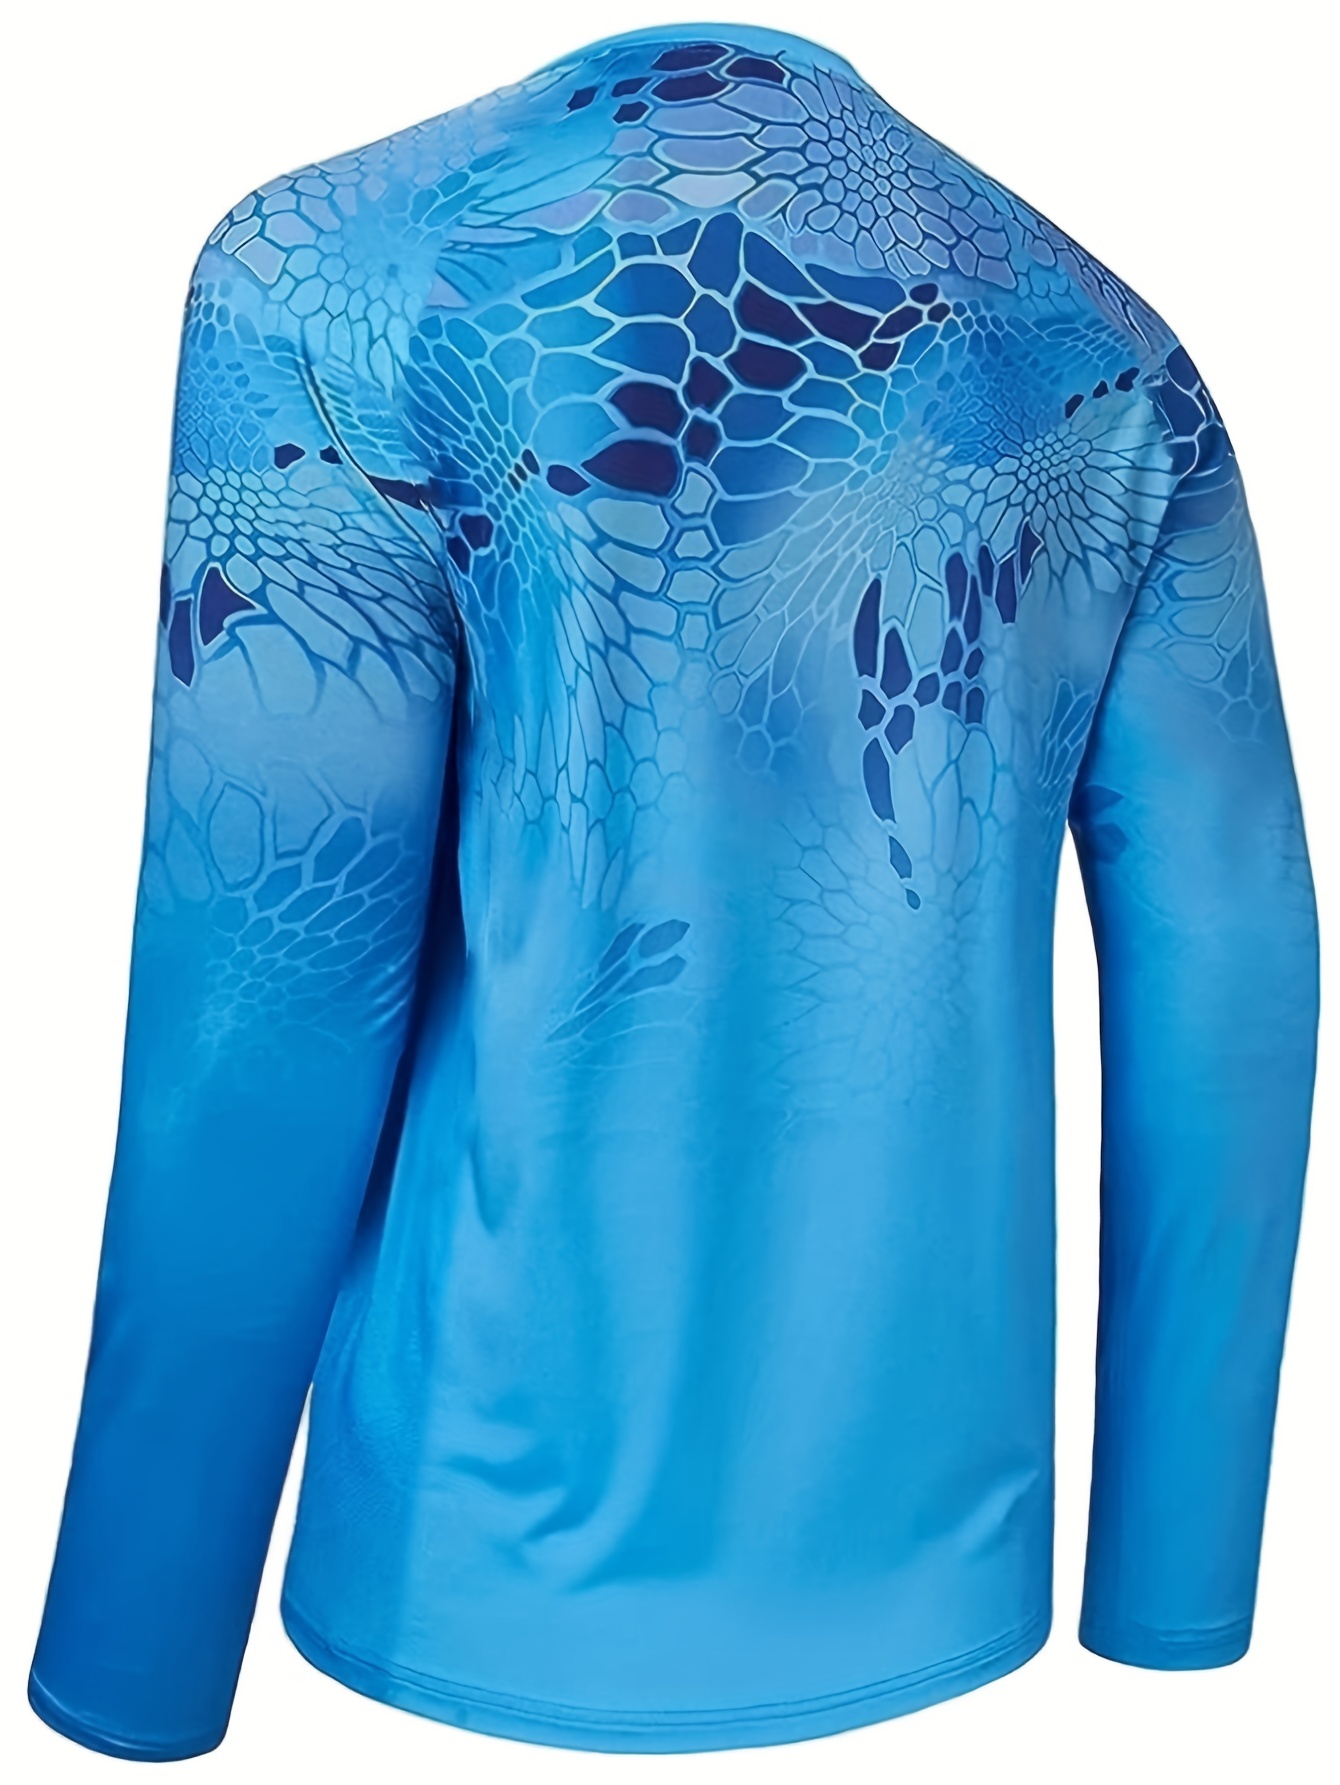 Ewedoos Swim Shirts For Men Rash Guard With Pocket Upf 50+ Uv Sun Protection Fishing Shirts Long Sleeve Sun Shirt Outdoor